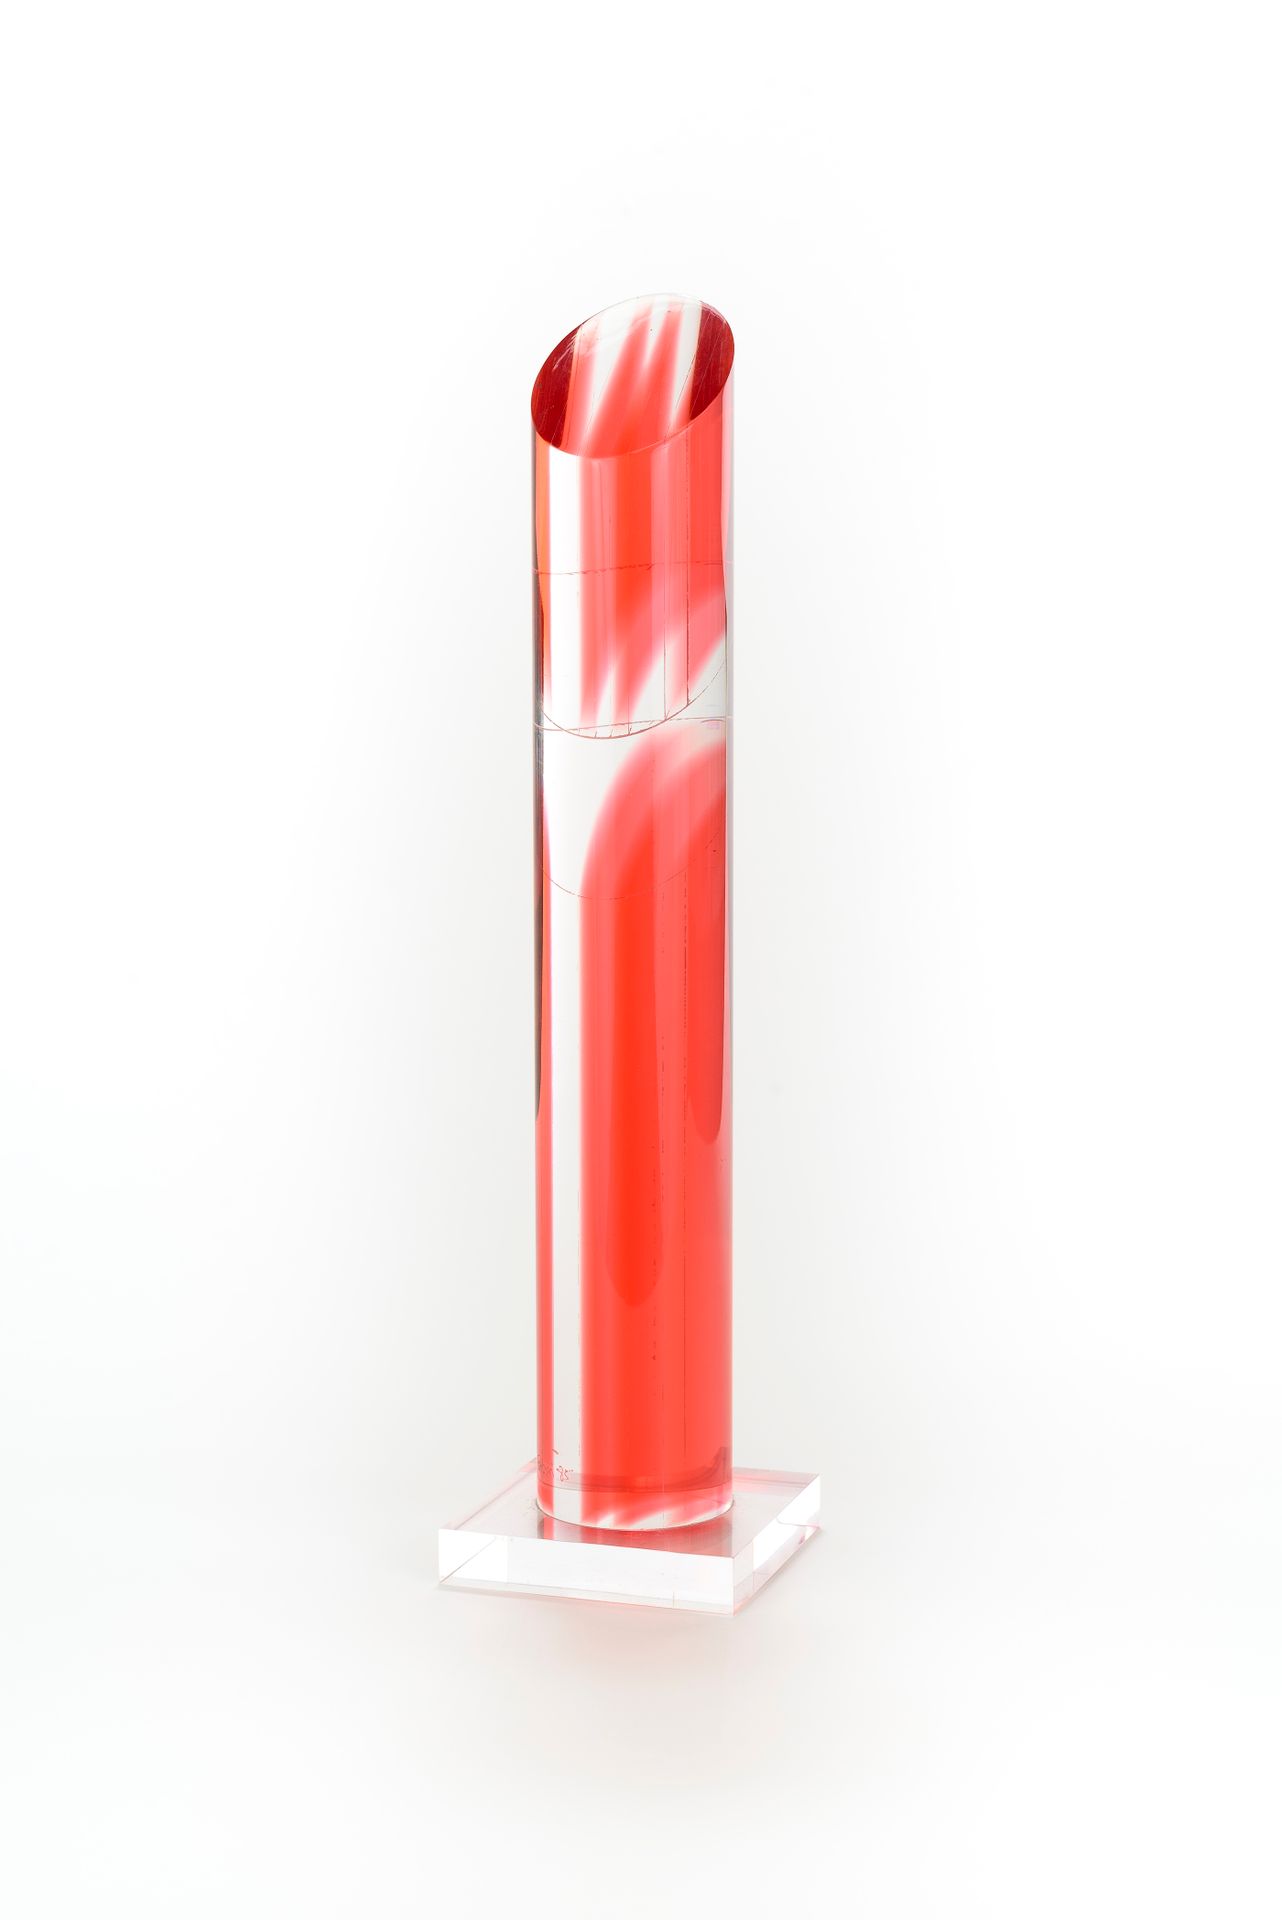 Null Jean-Claude FARHI (1940-2012)

Small beveled column (pink), 1985

Polyvinyl&hellip;